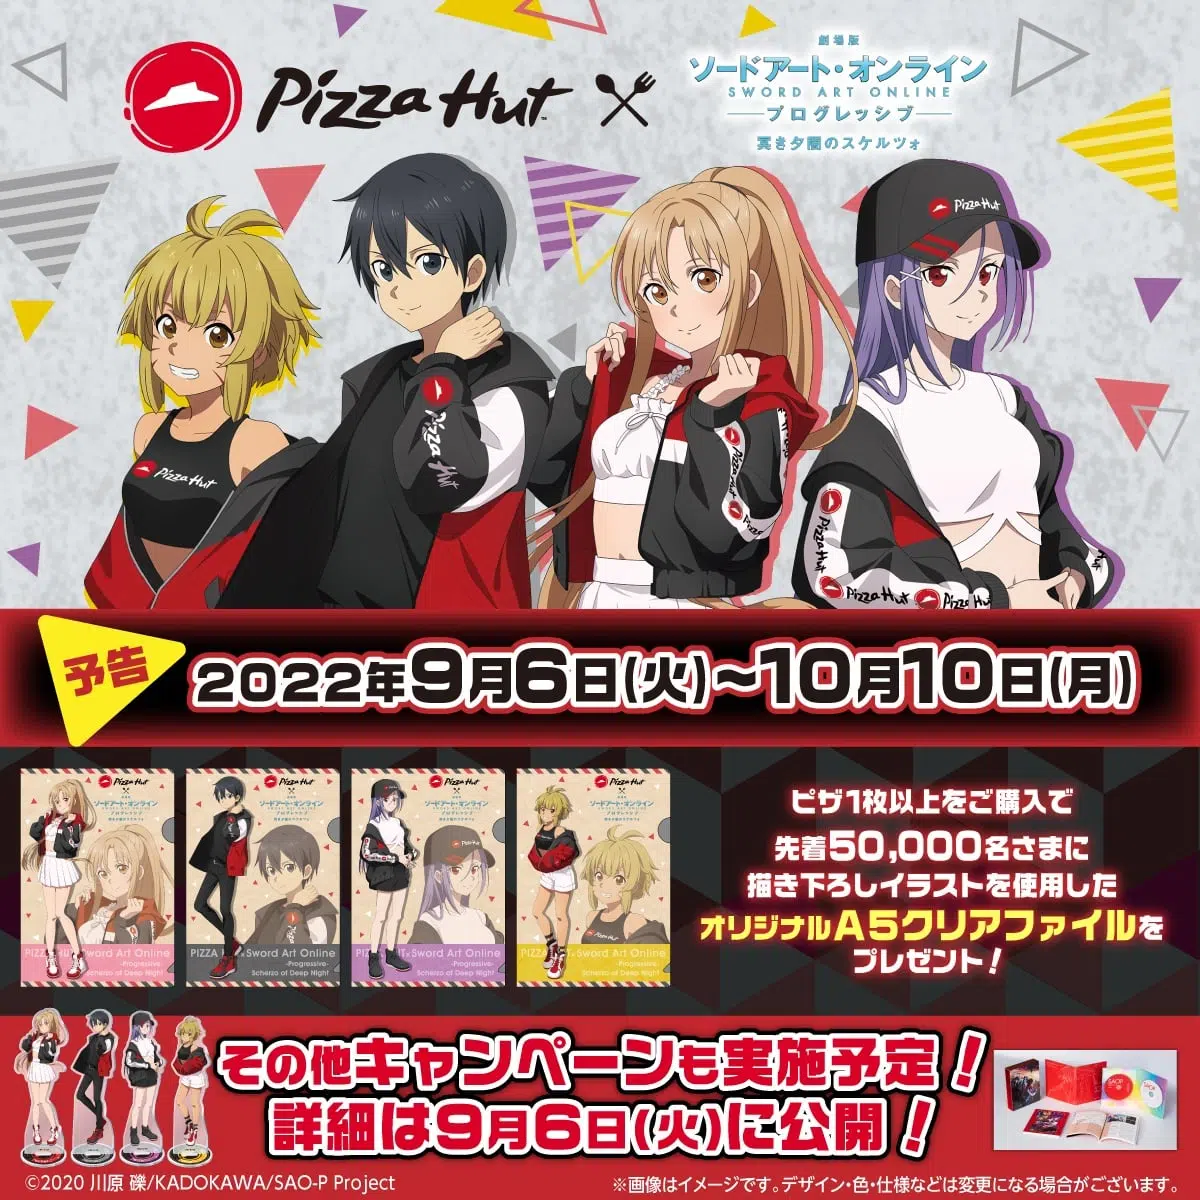 Pizza Hut Sword Art Online Min